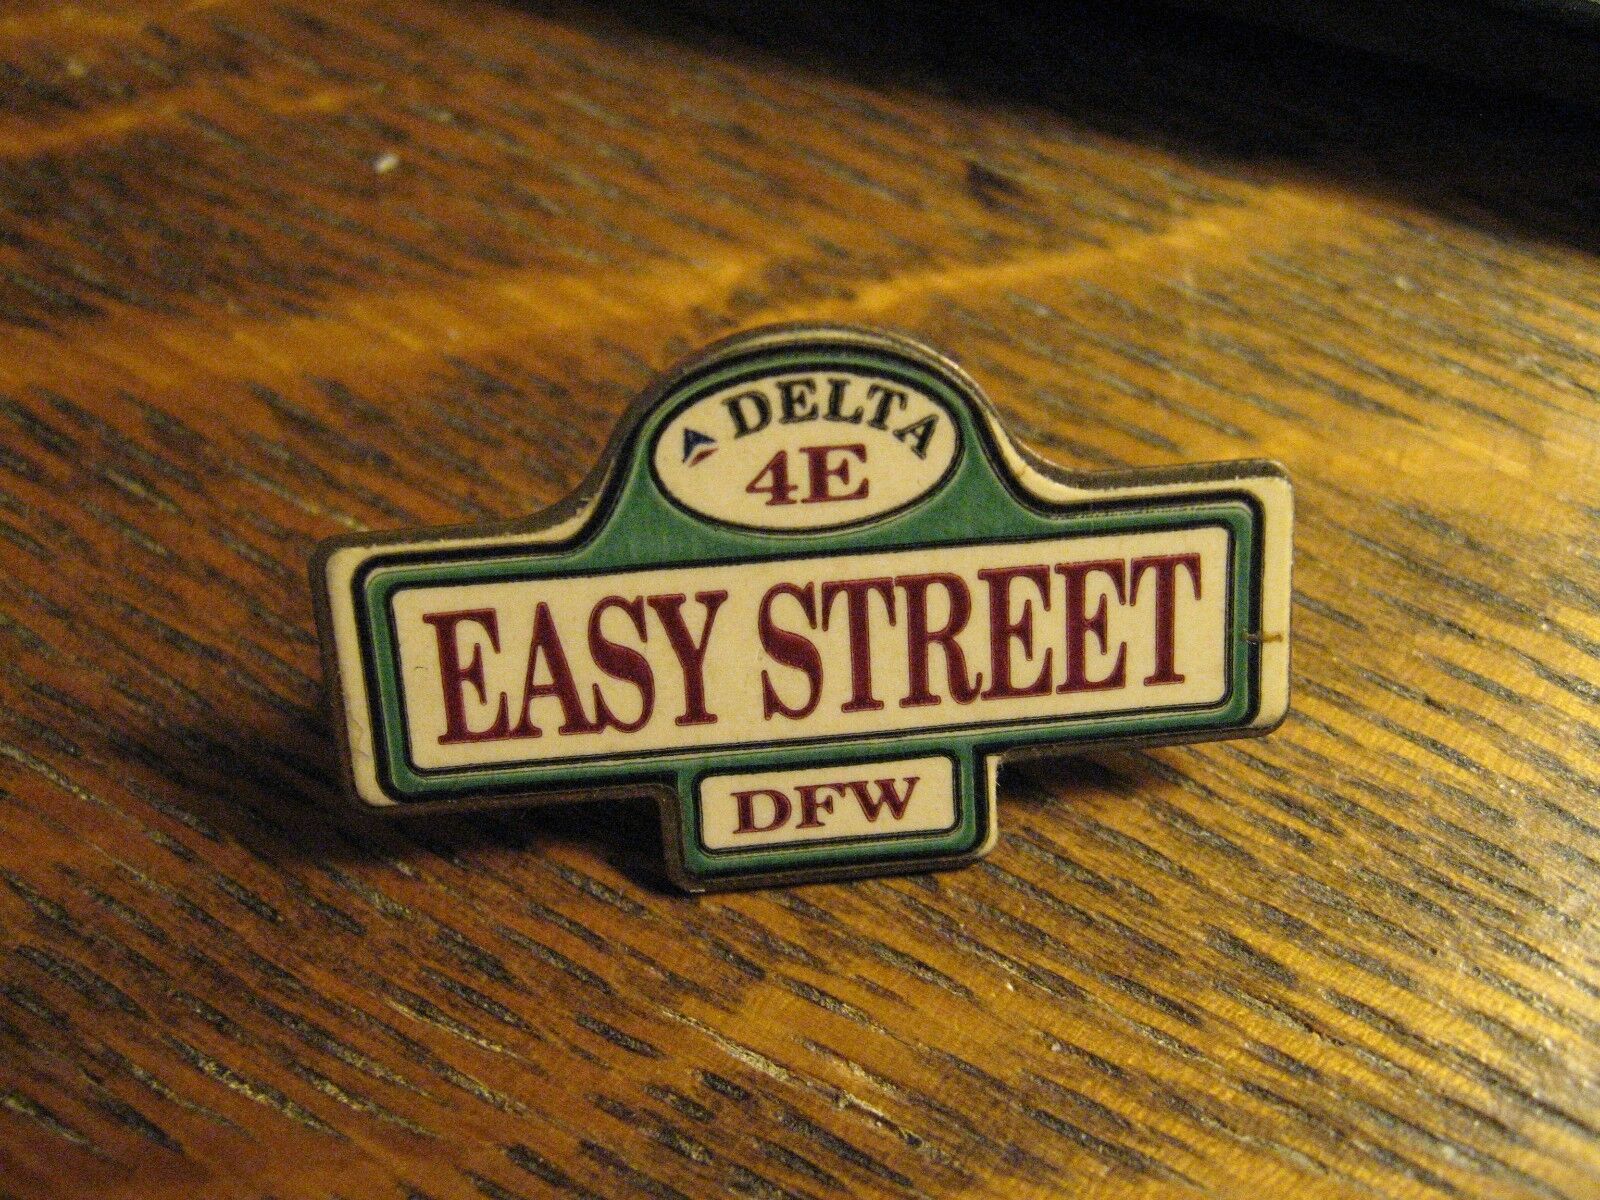 Delta Airlines 1988 Dallas Texas Airport Terminal E Easy Street 4E Lapel Hat Pin